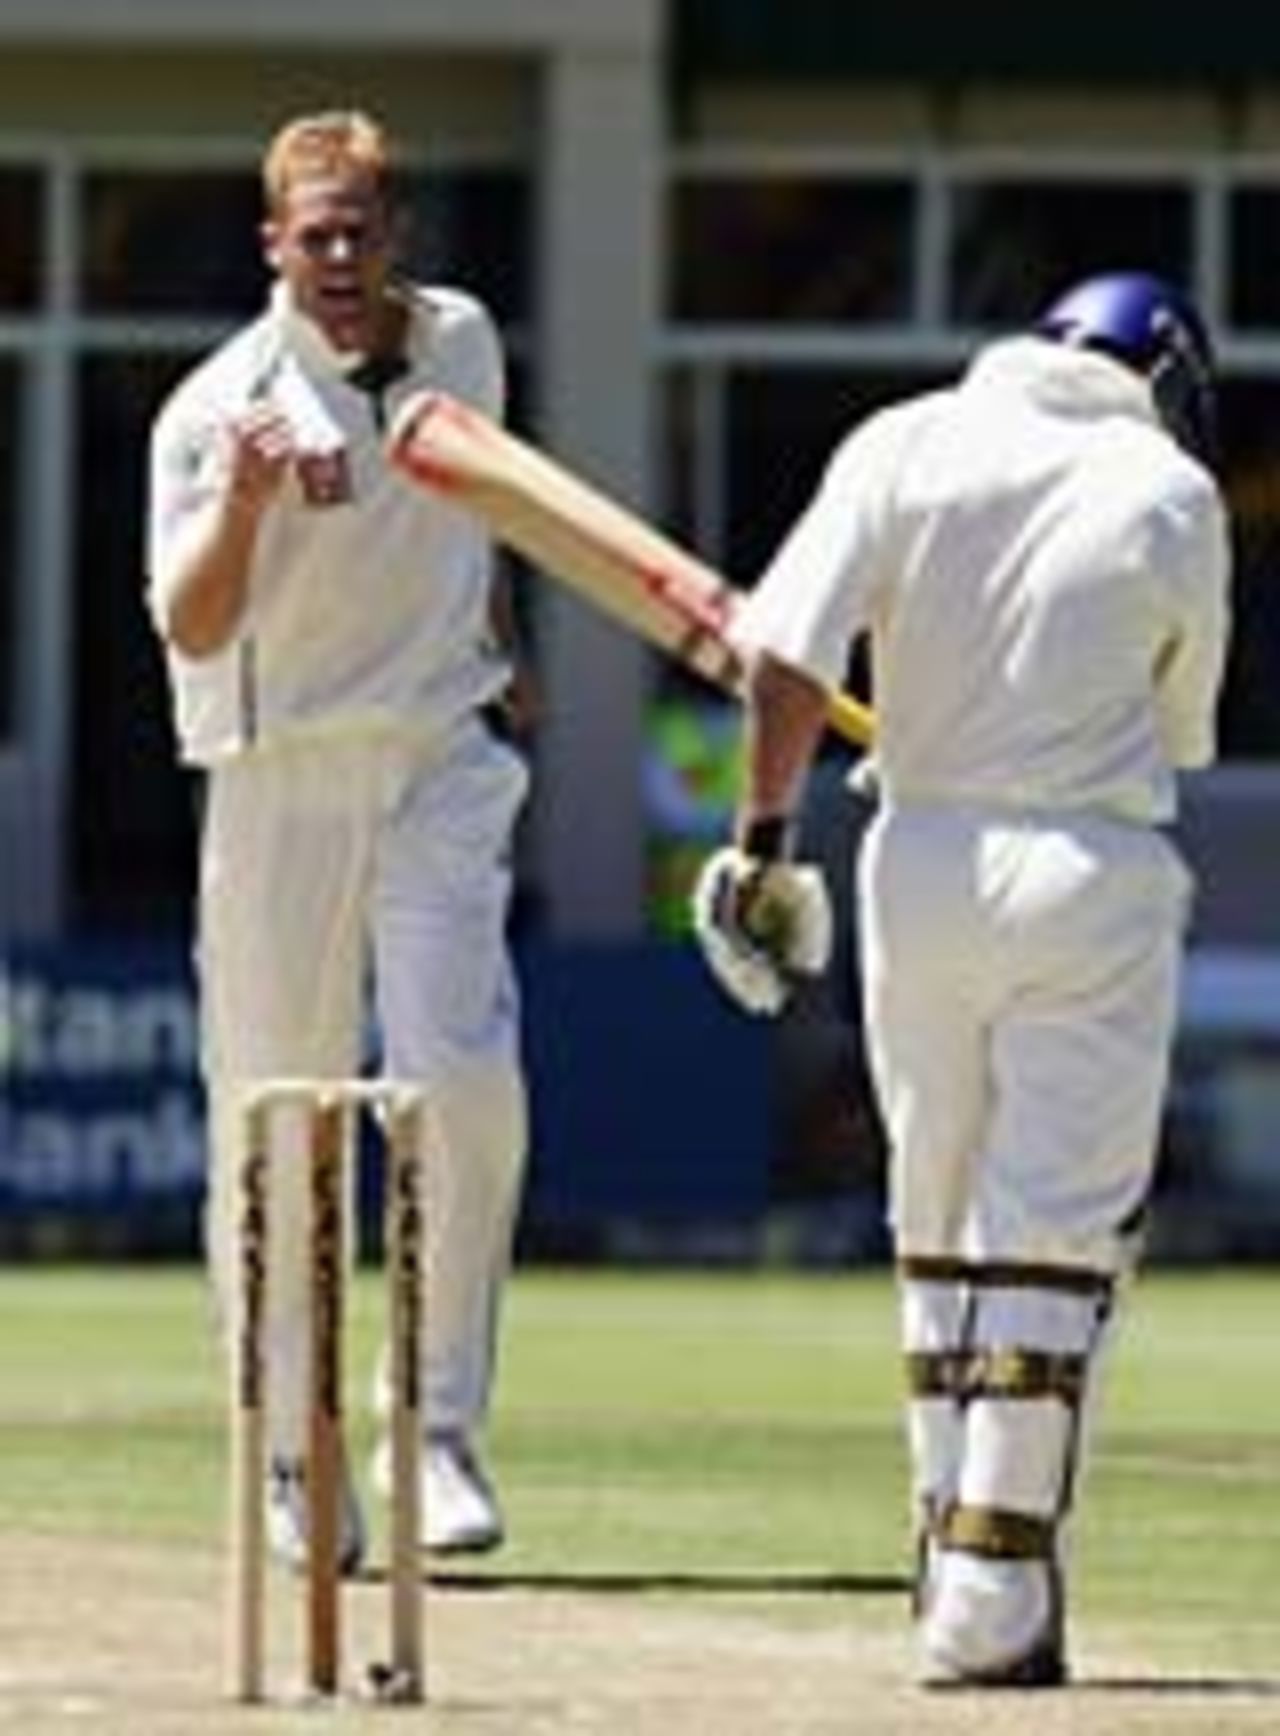 Shaun Pollock celebrates dismissing Andrew Strauss, South Africa v England, 1st Test, Port Elizabeth, December 19 2004